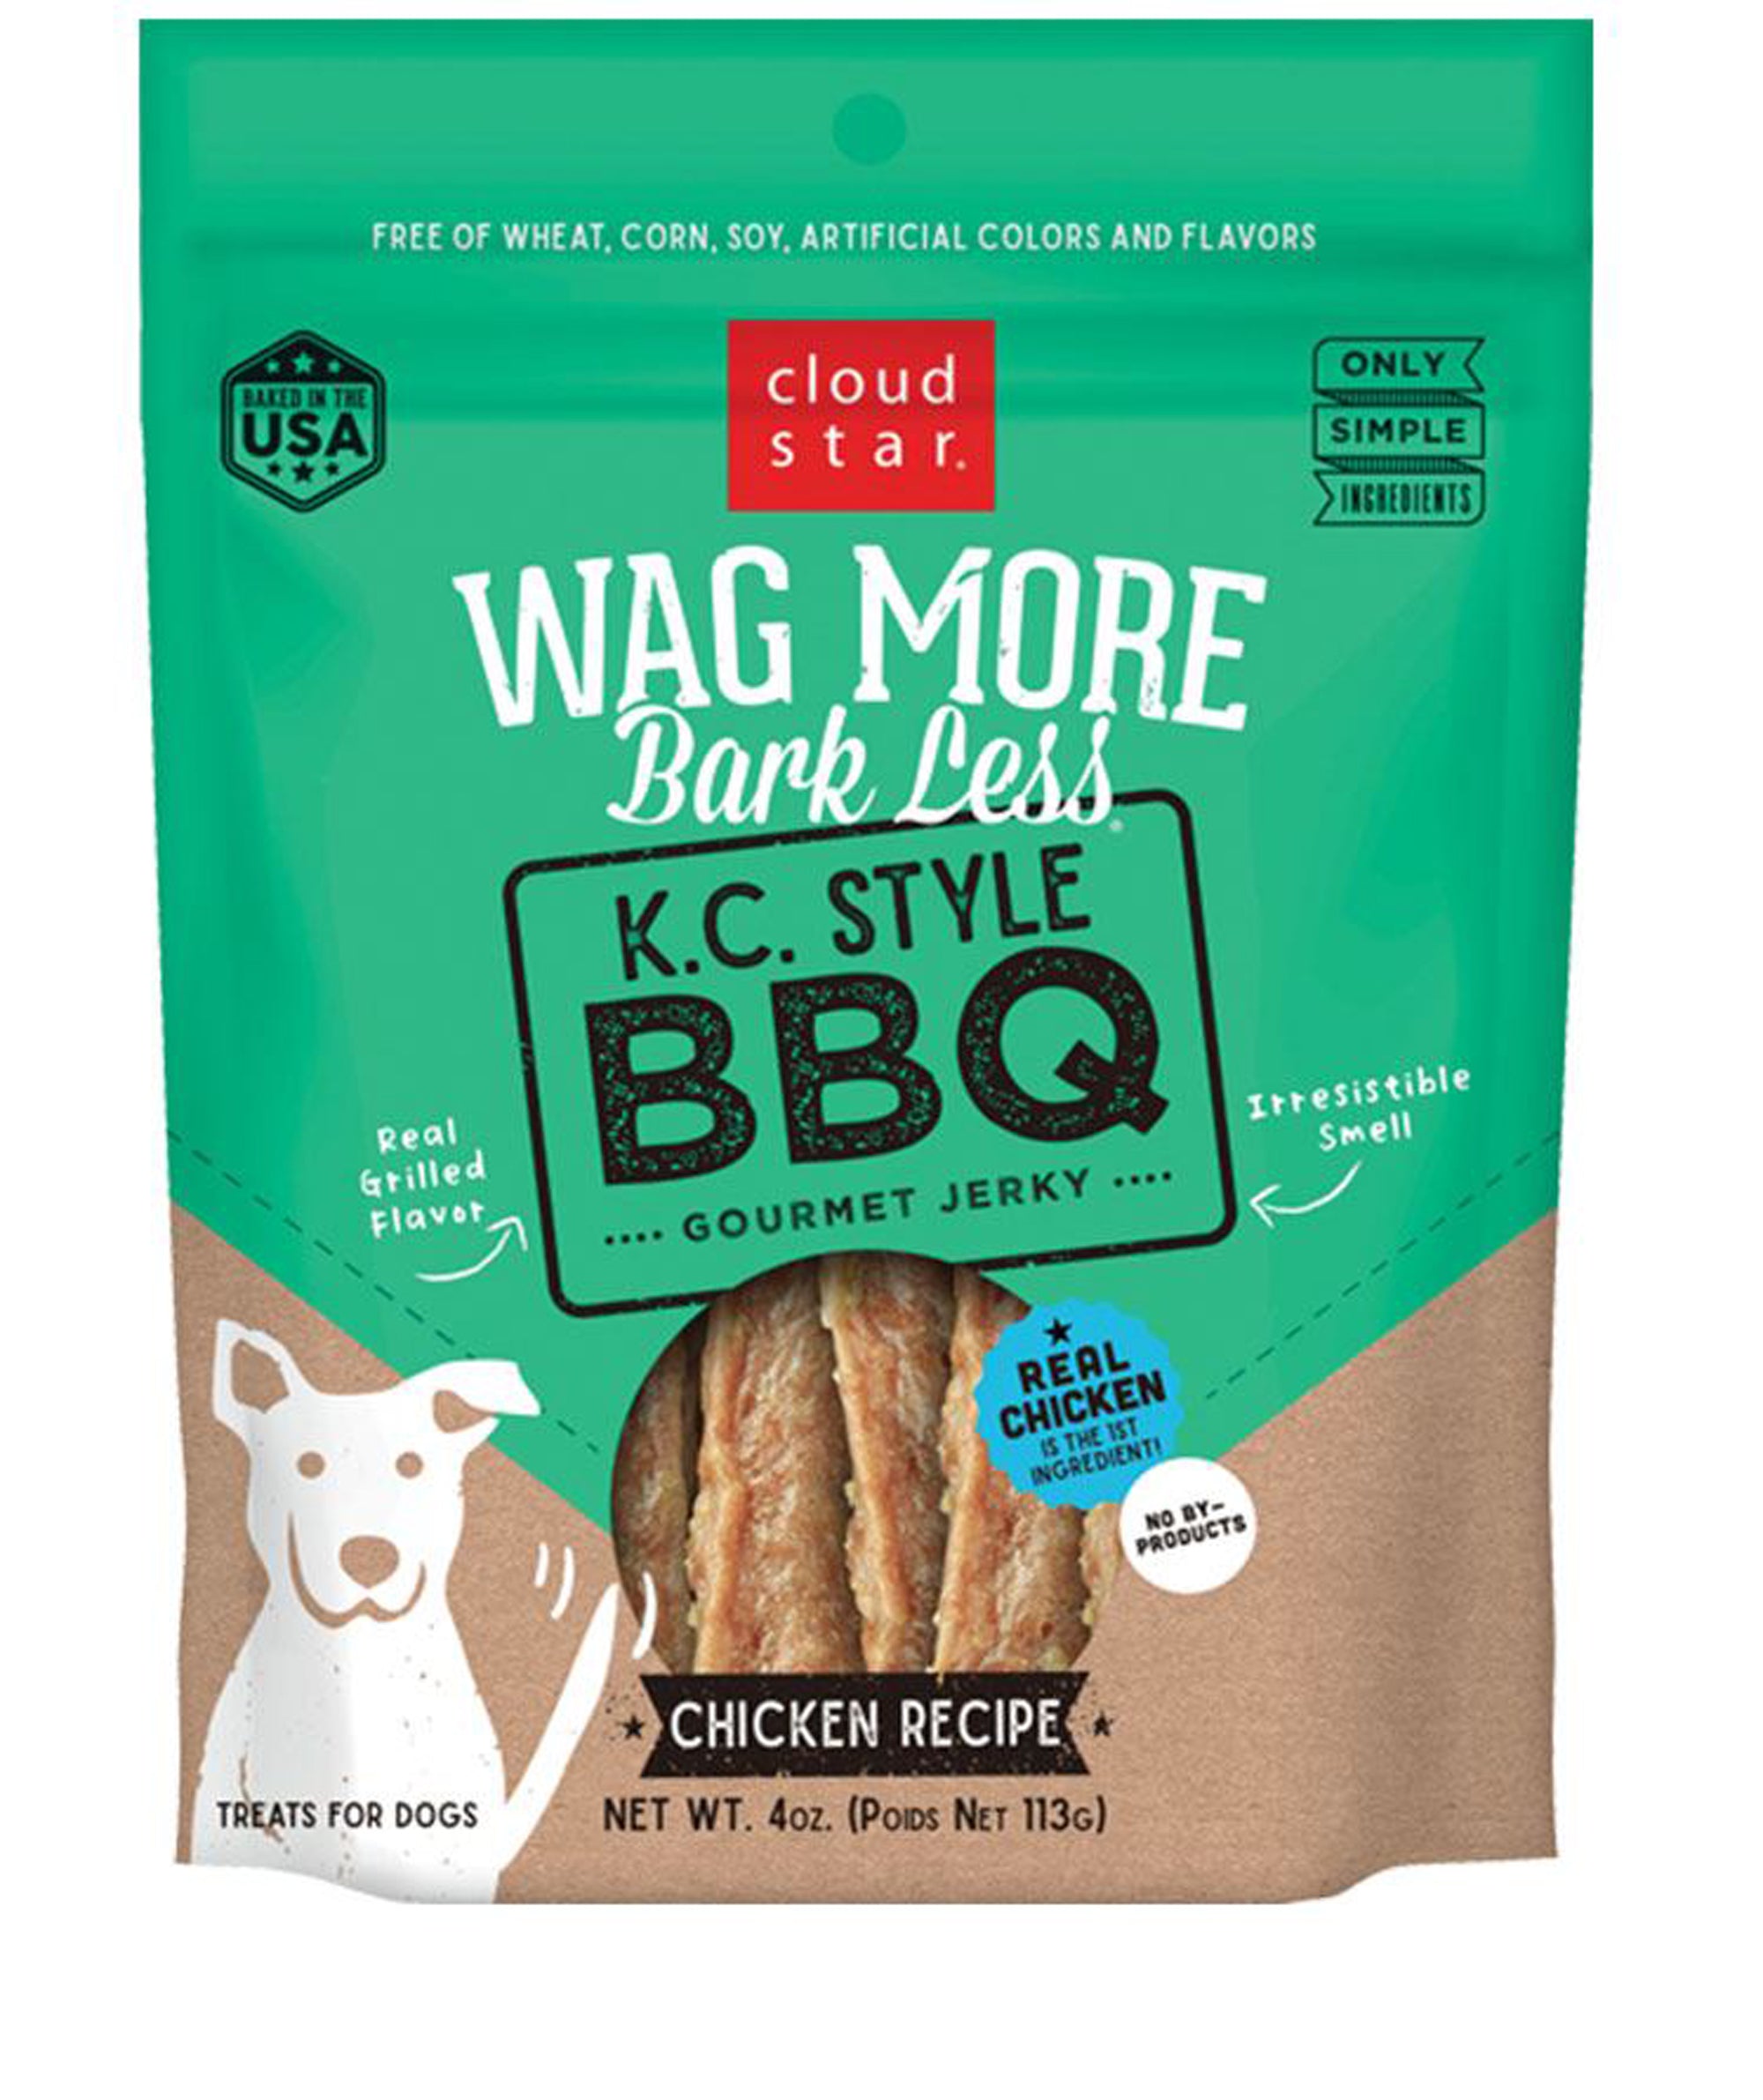 Wag More Bark Less Dog Jerky Grain Free K.C. Style Chicken 10oz.